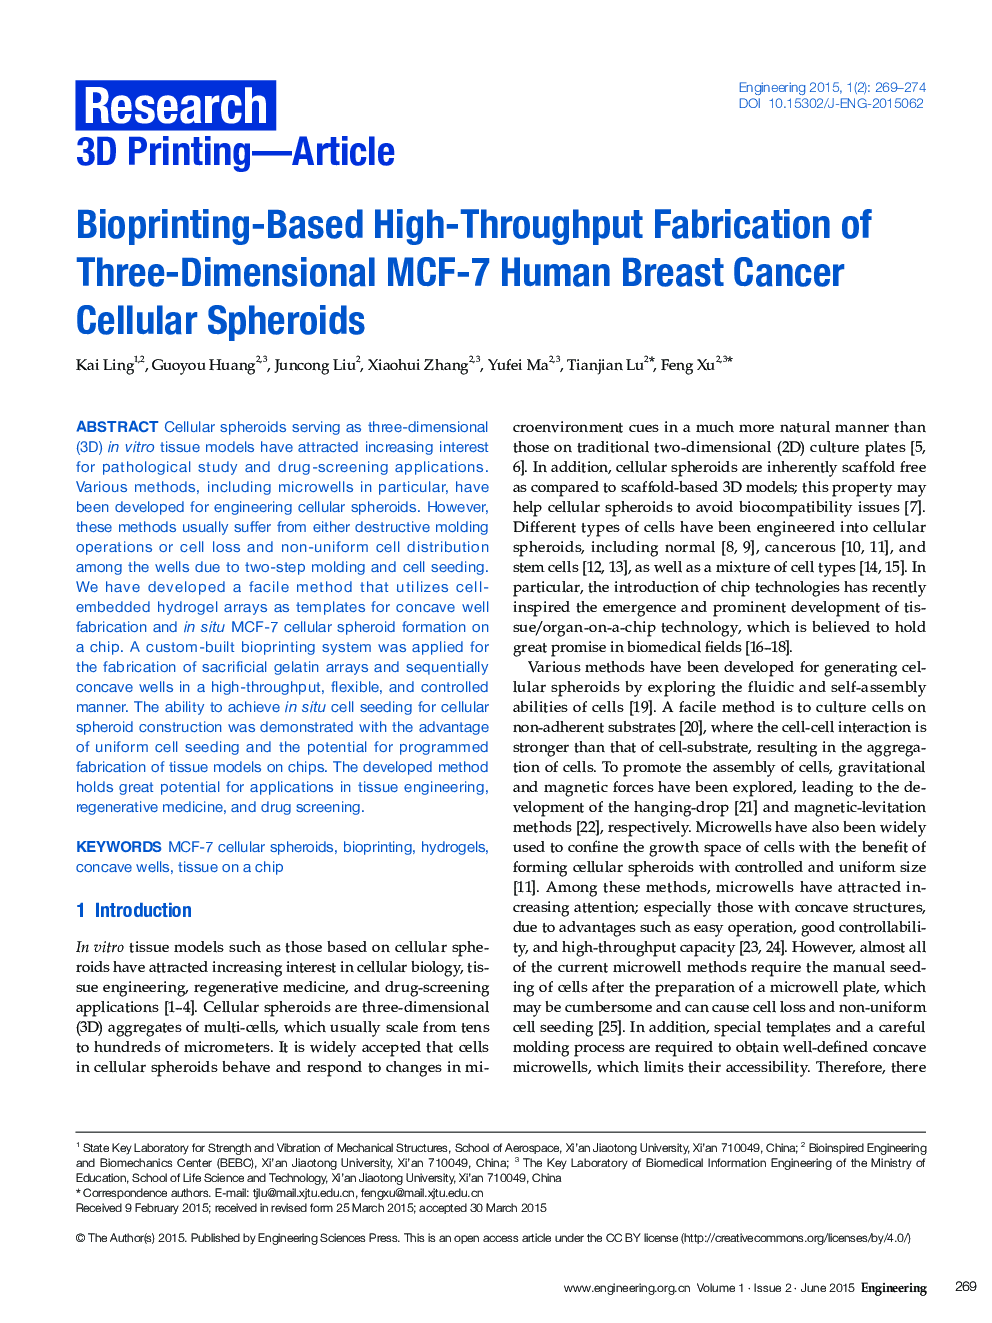 Bioprinting-Based High-Throughput Fabrication of Three-Dimensional MCF-7 Human Breast Cancer Cellular Spheroids